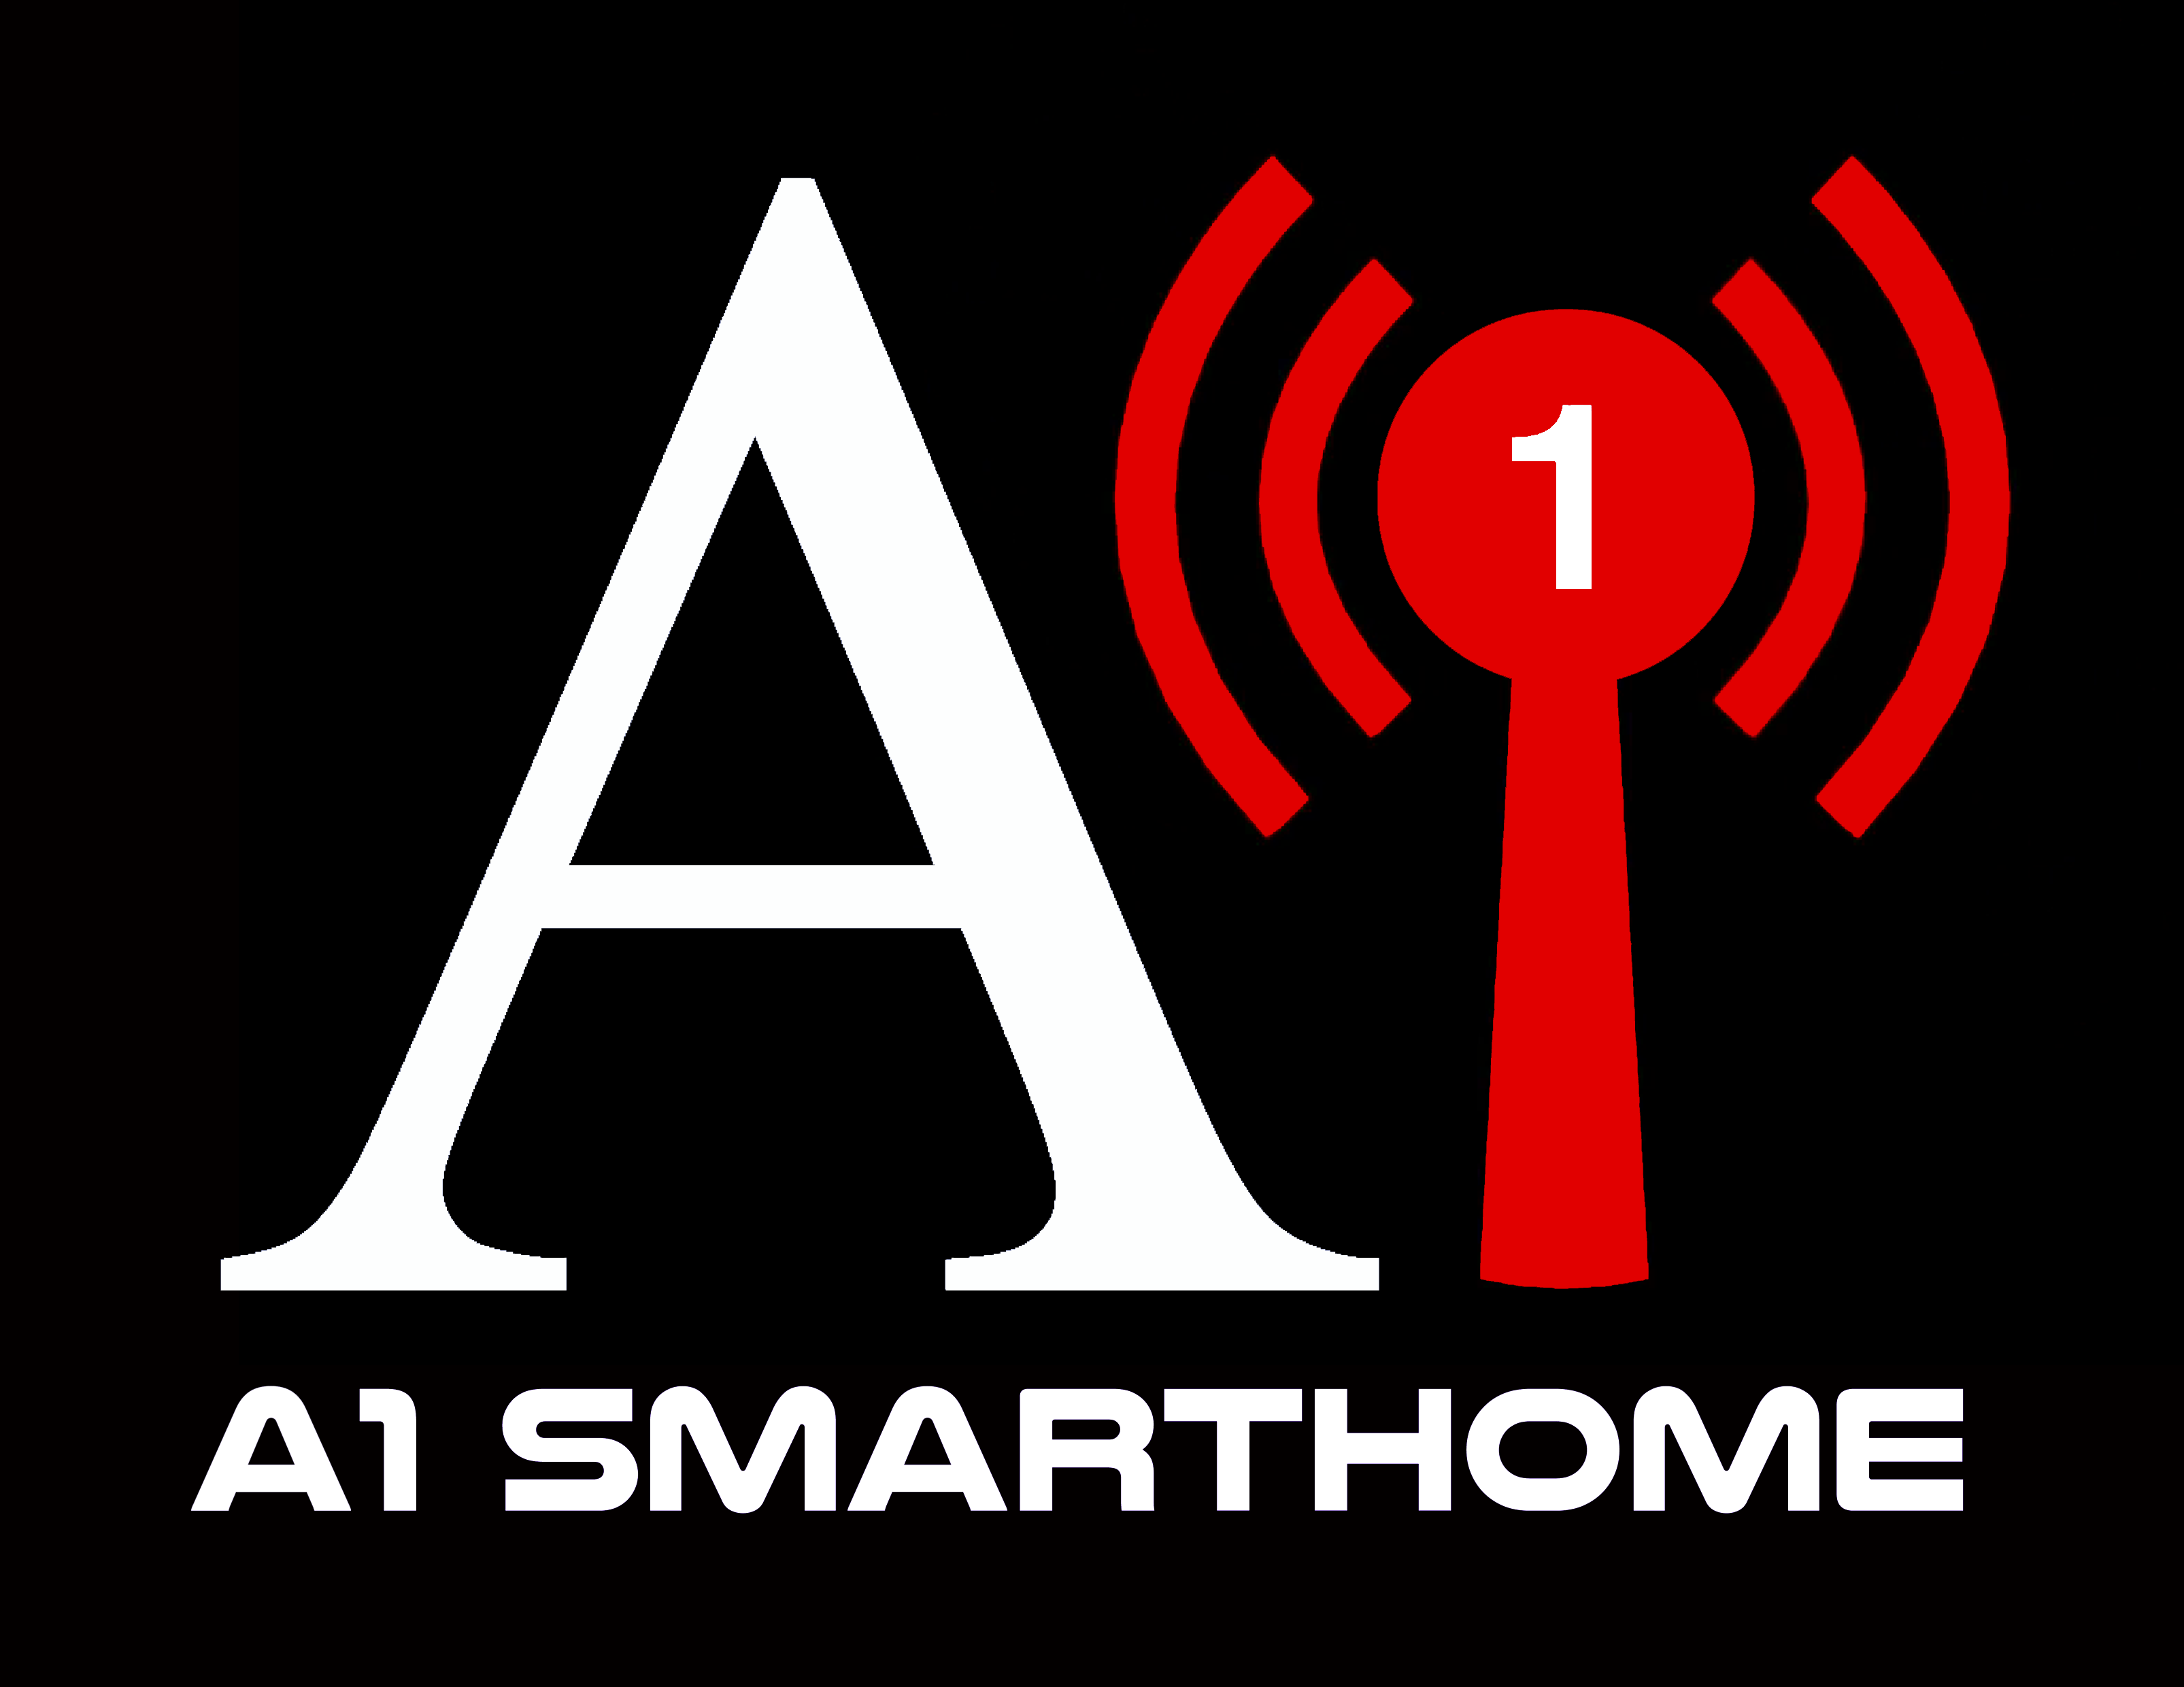 A1 logo interlaced